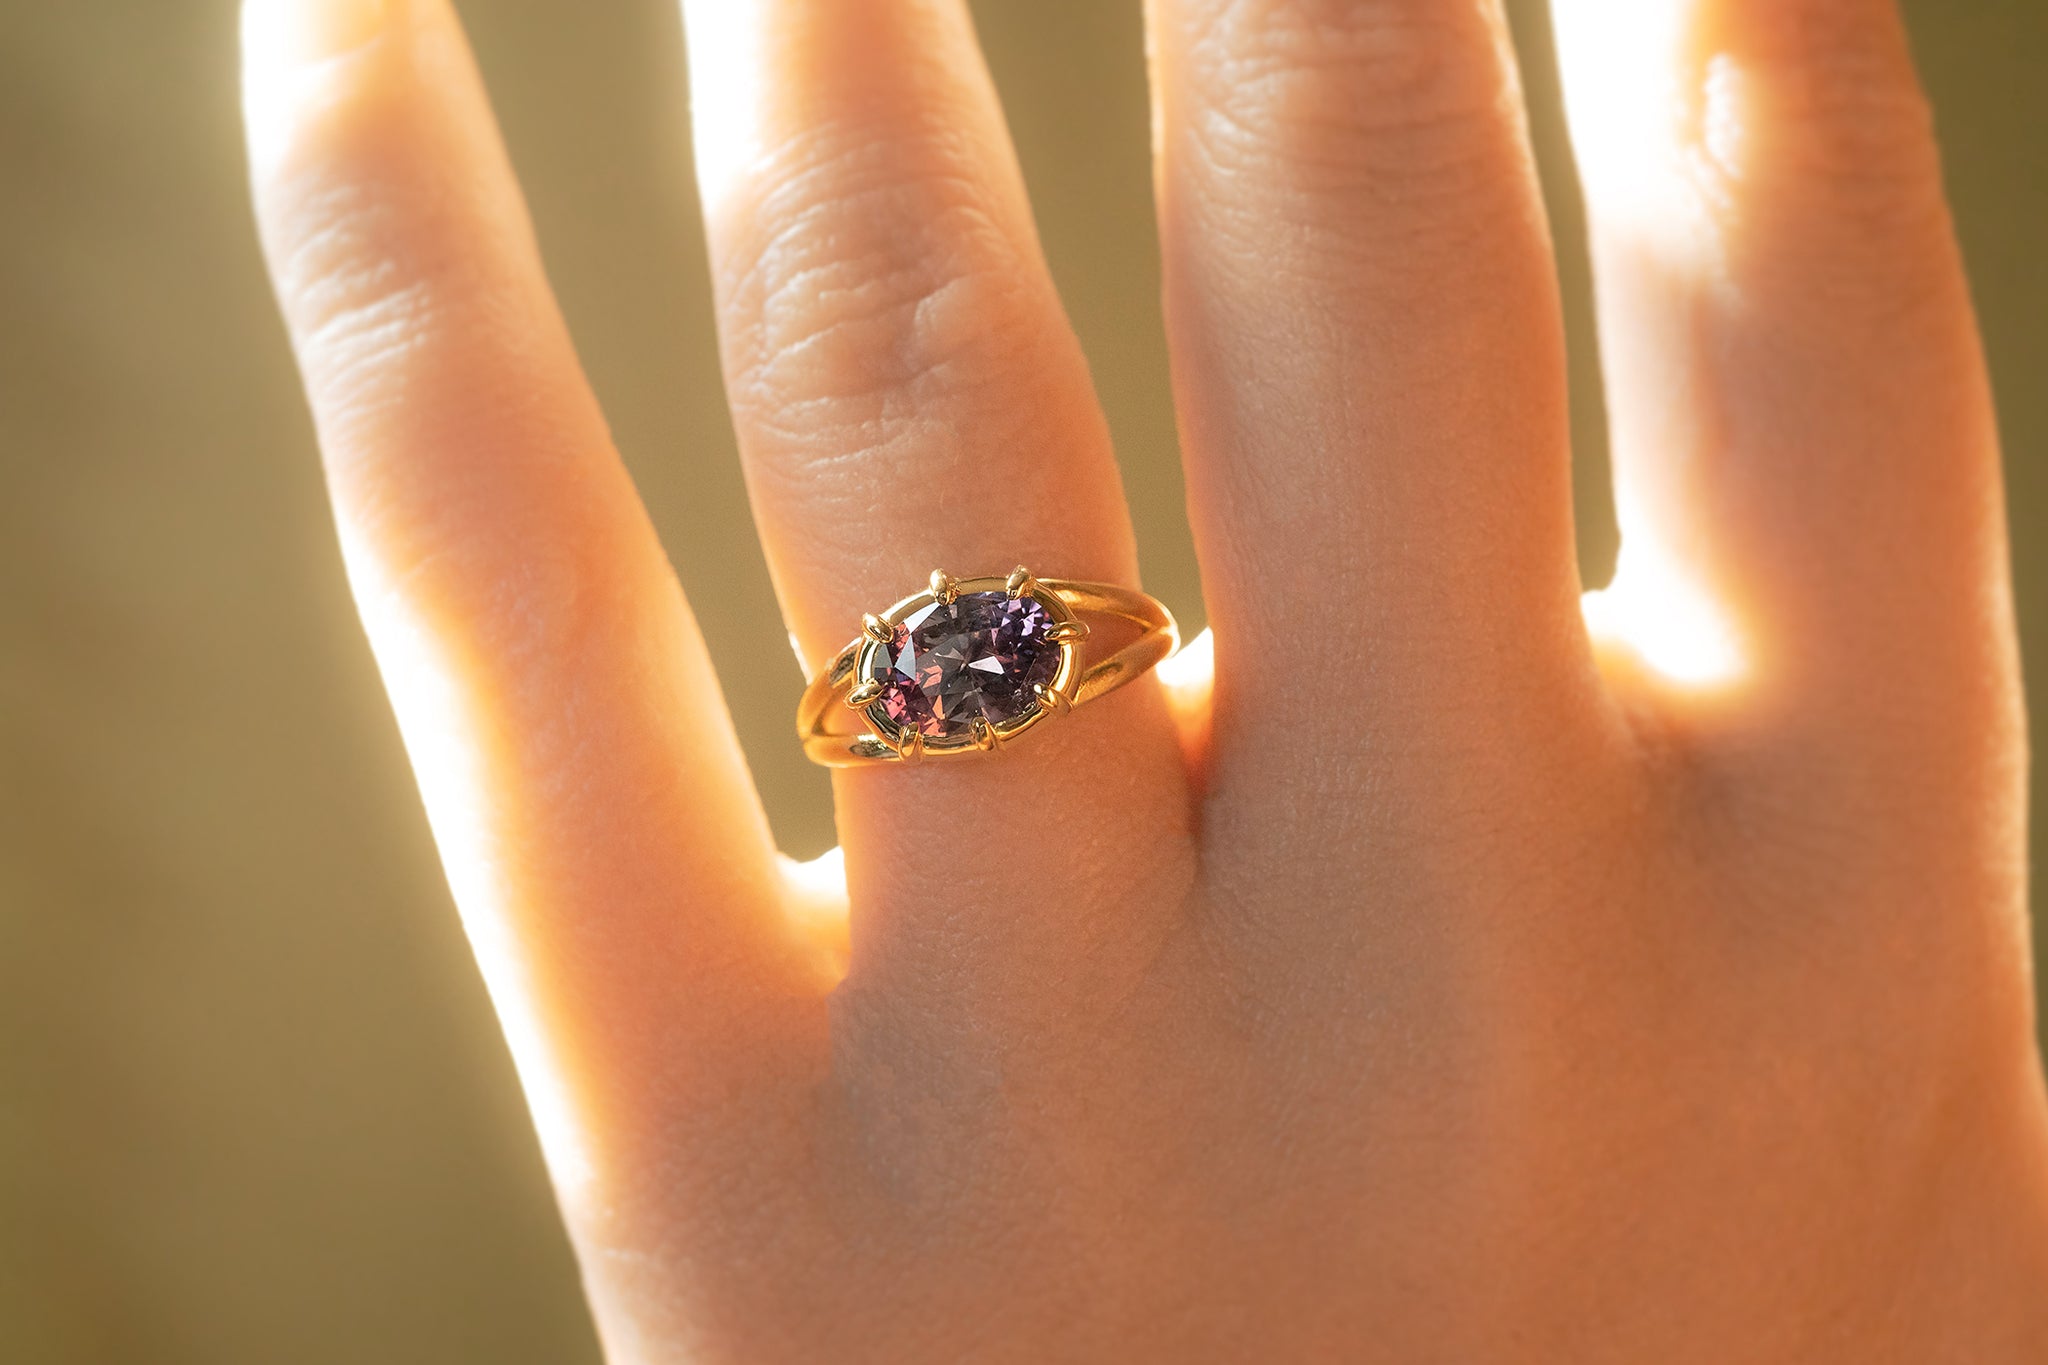 Untreated Purplish Pink Sapphire Ring - S. Kind & Co